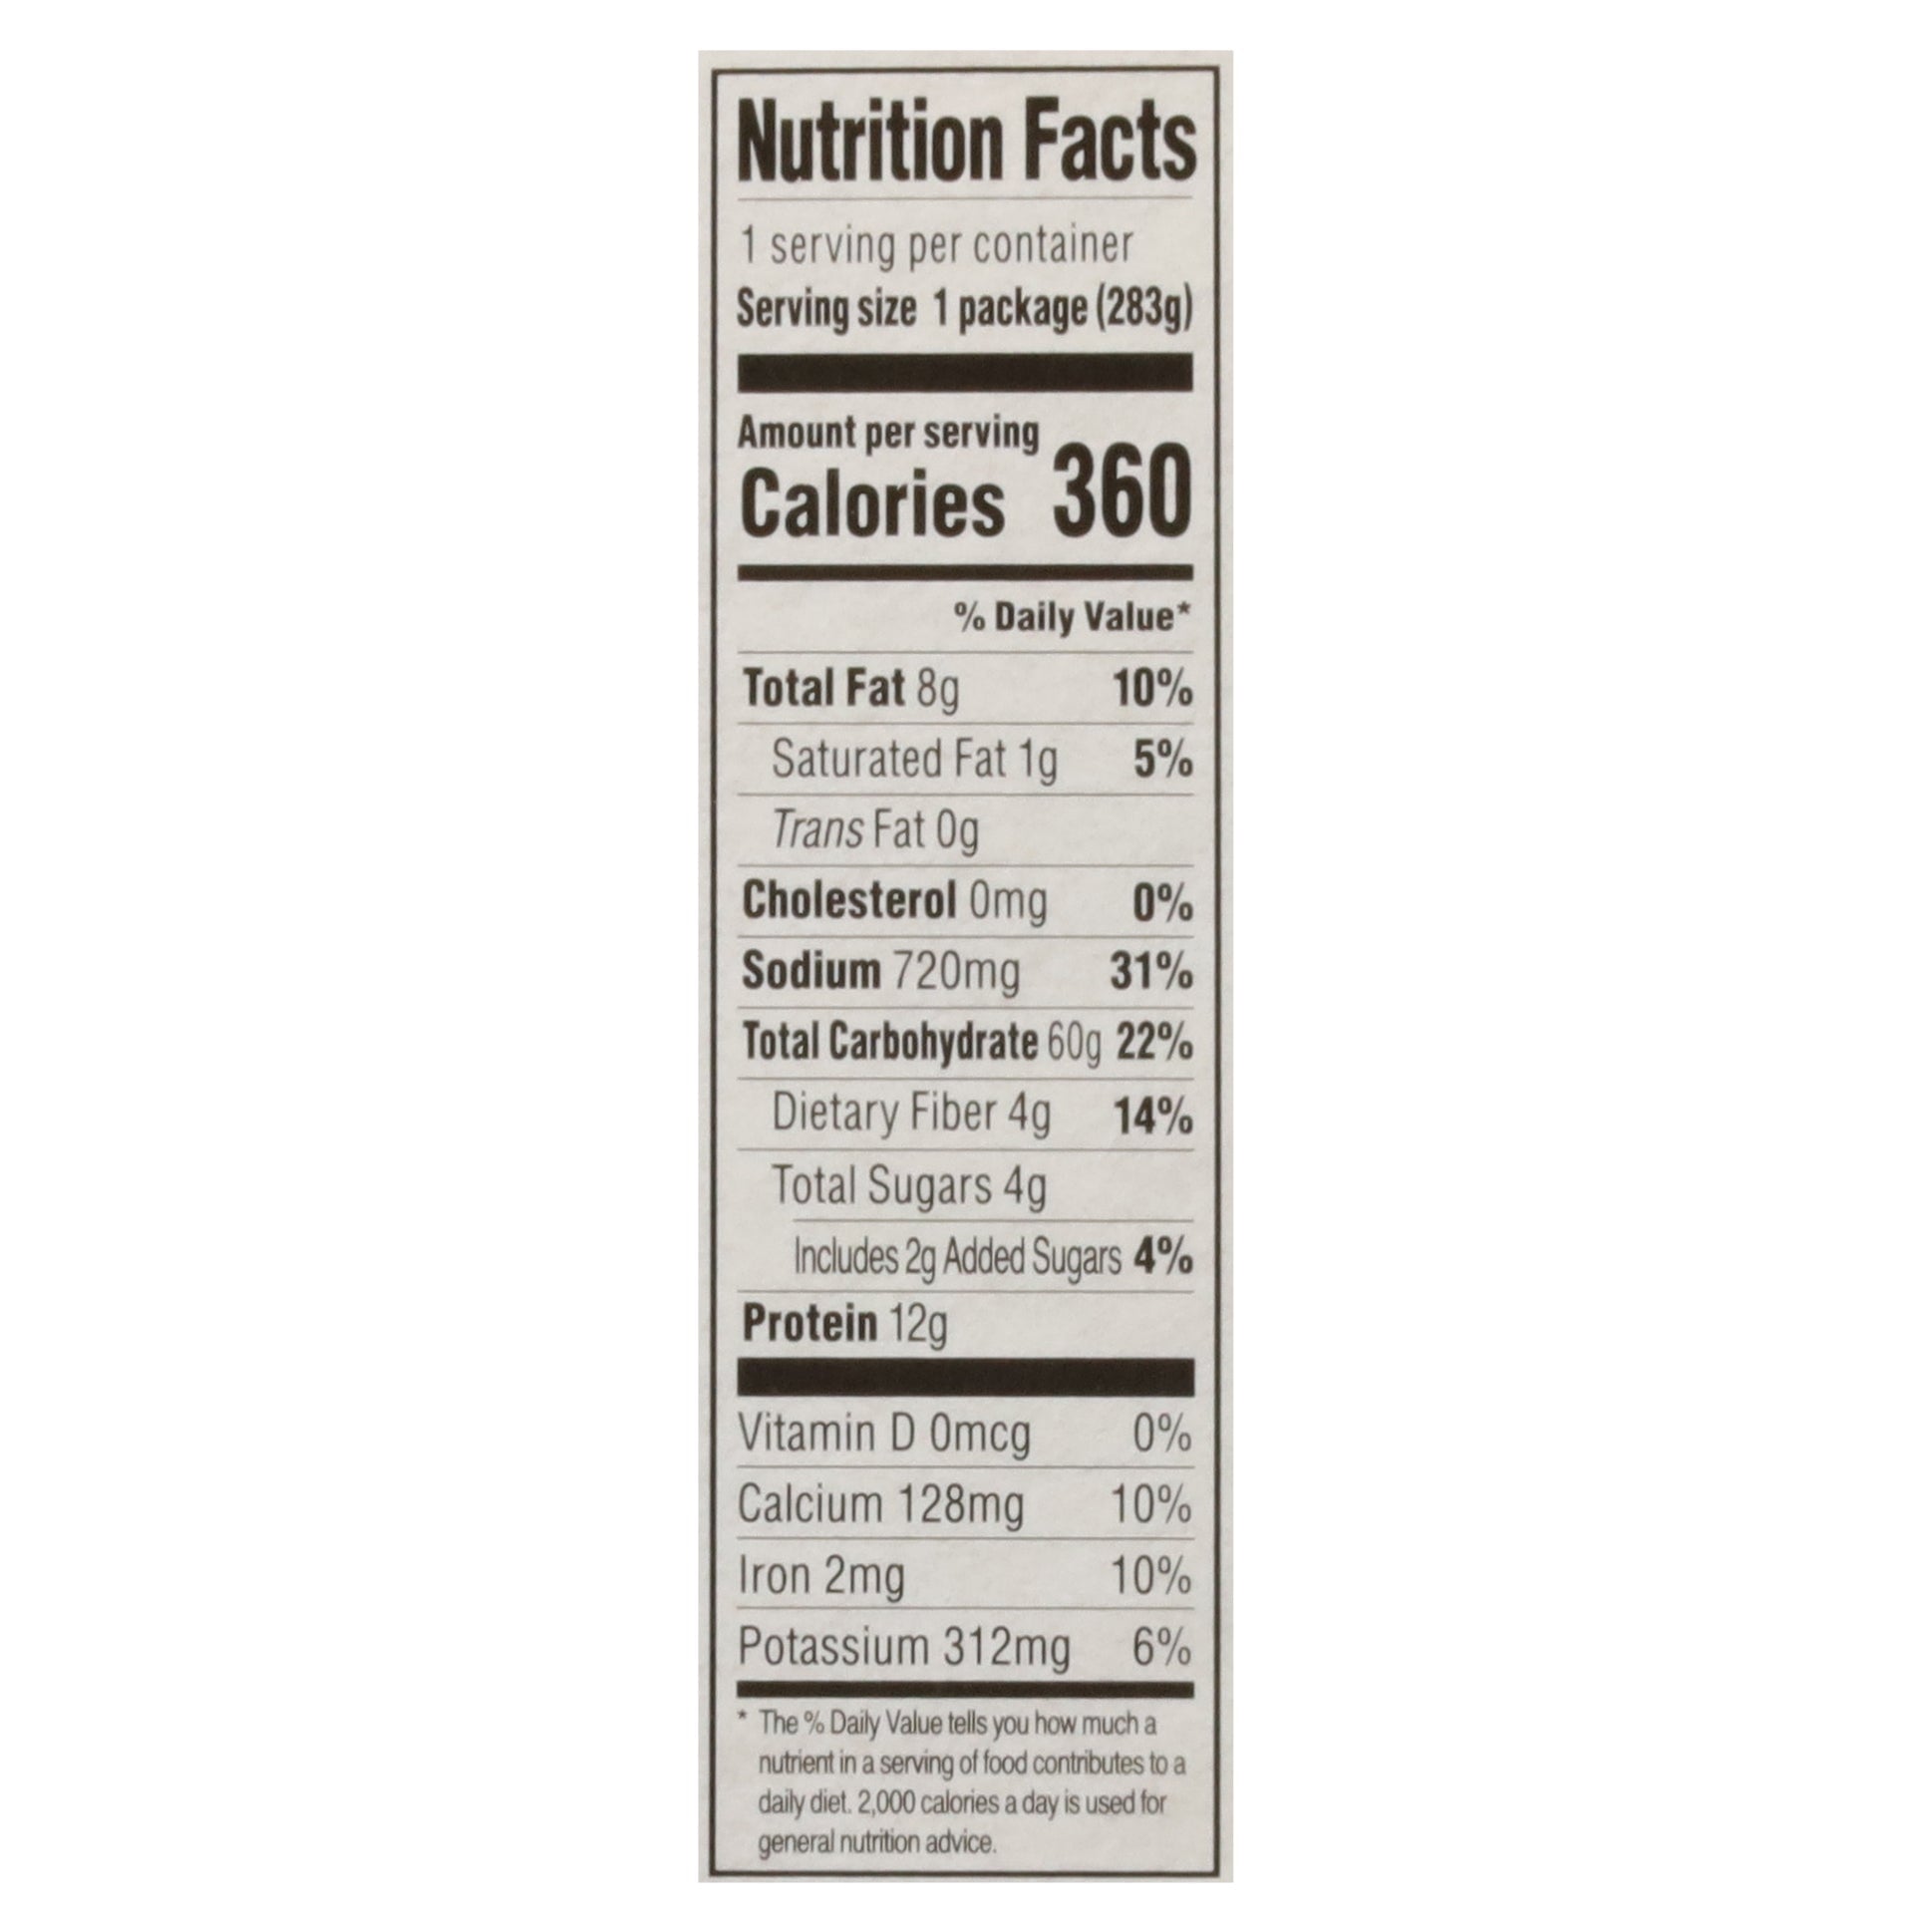 Nutrition Facts for Saffron Road Korean-Style Rice Vegetable Bibimbap. 360 calories, 8g fat, 720mg sodium, 60g carbs, 4g fiber, 12g protein per serving.